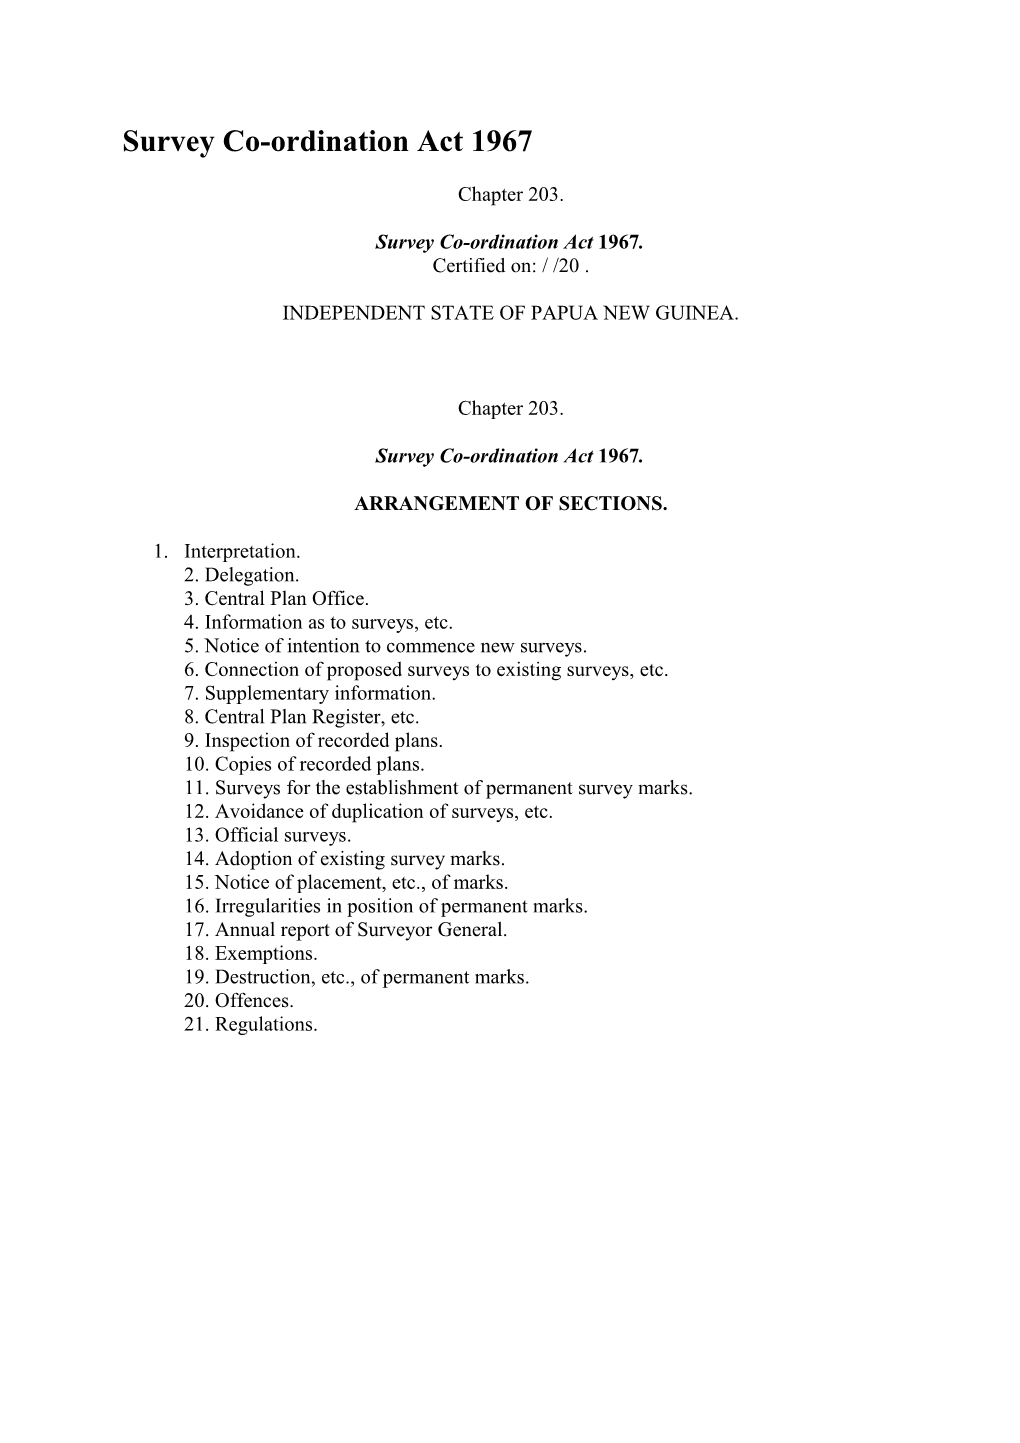 Survey Co-Ordination Act 1967